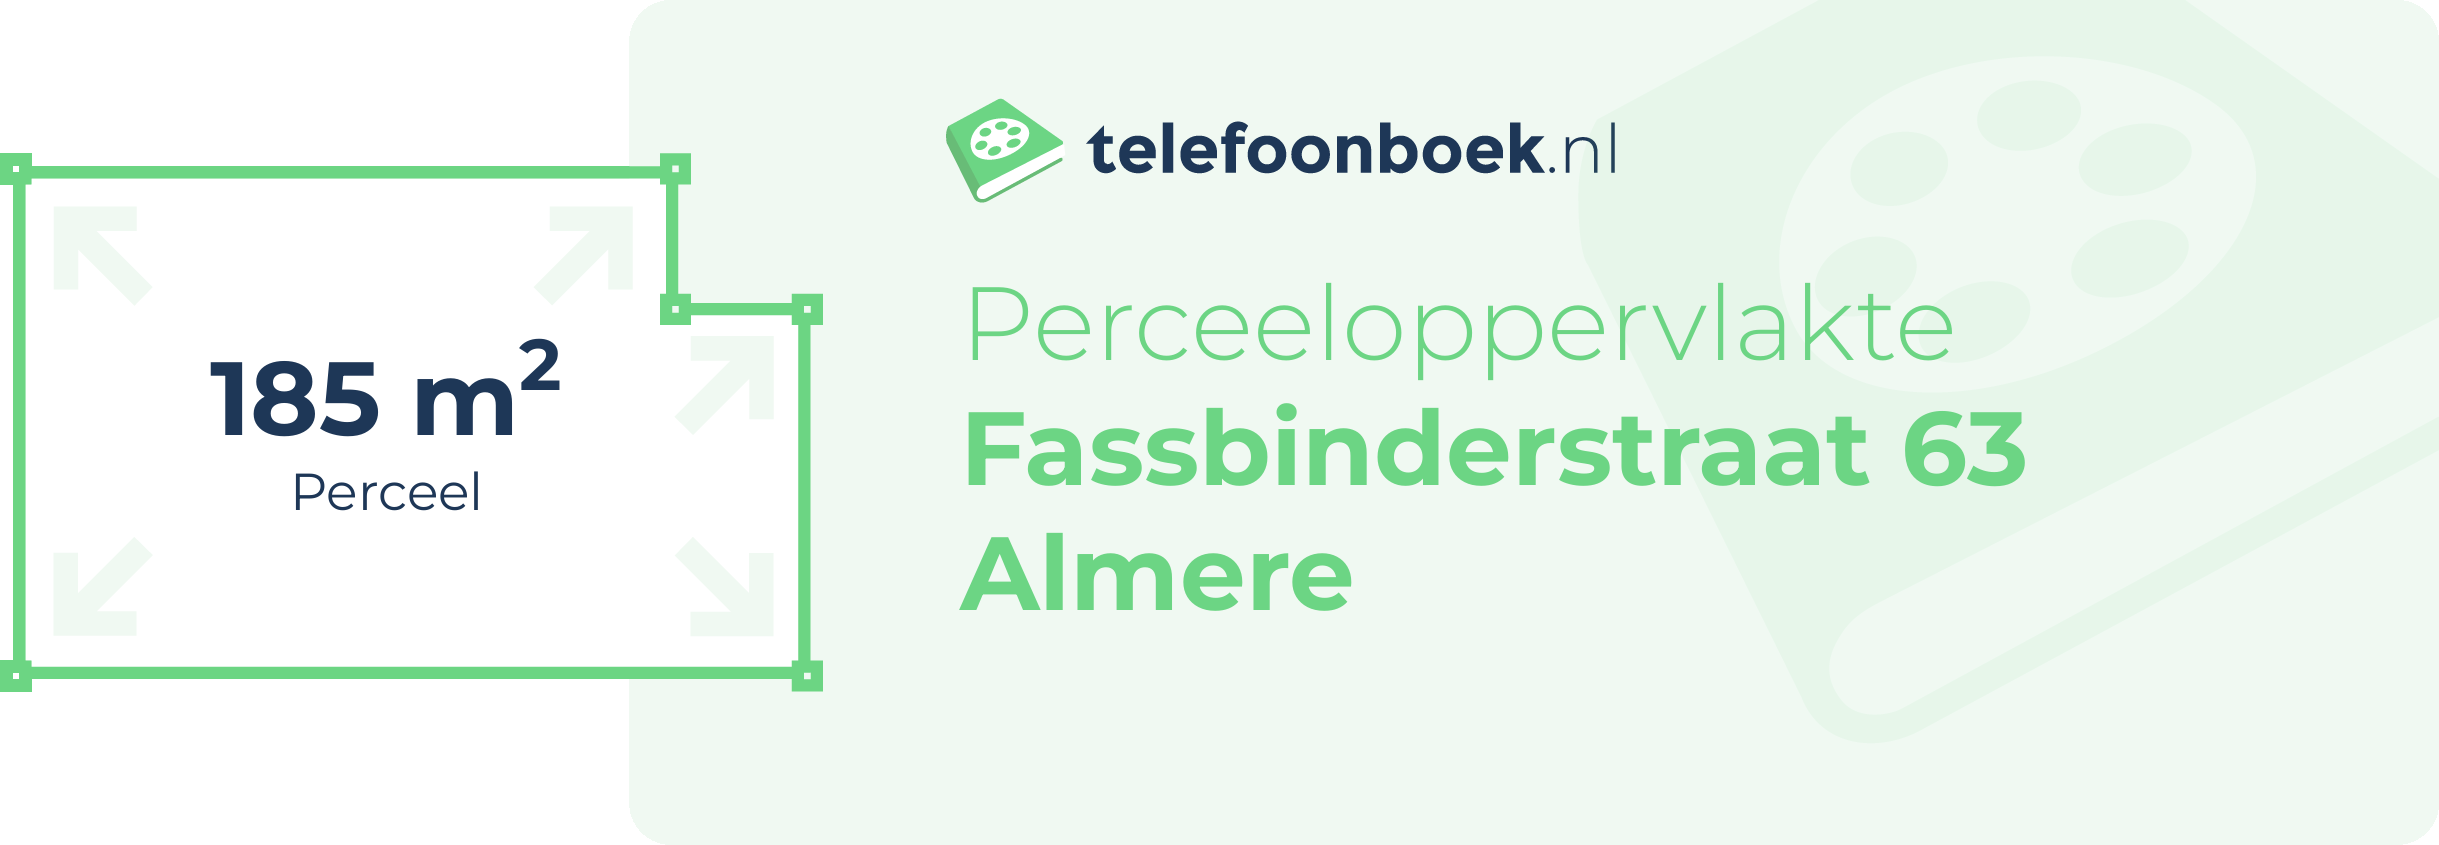 Perceeloppervlakte Fassbinderstraat 63 Almere